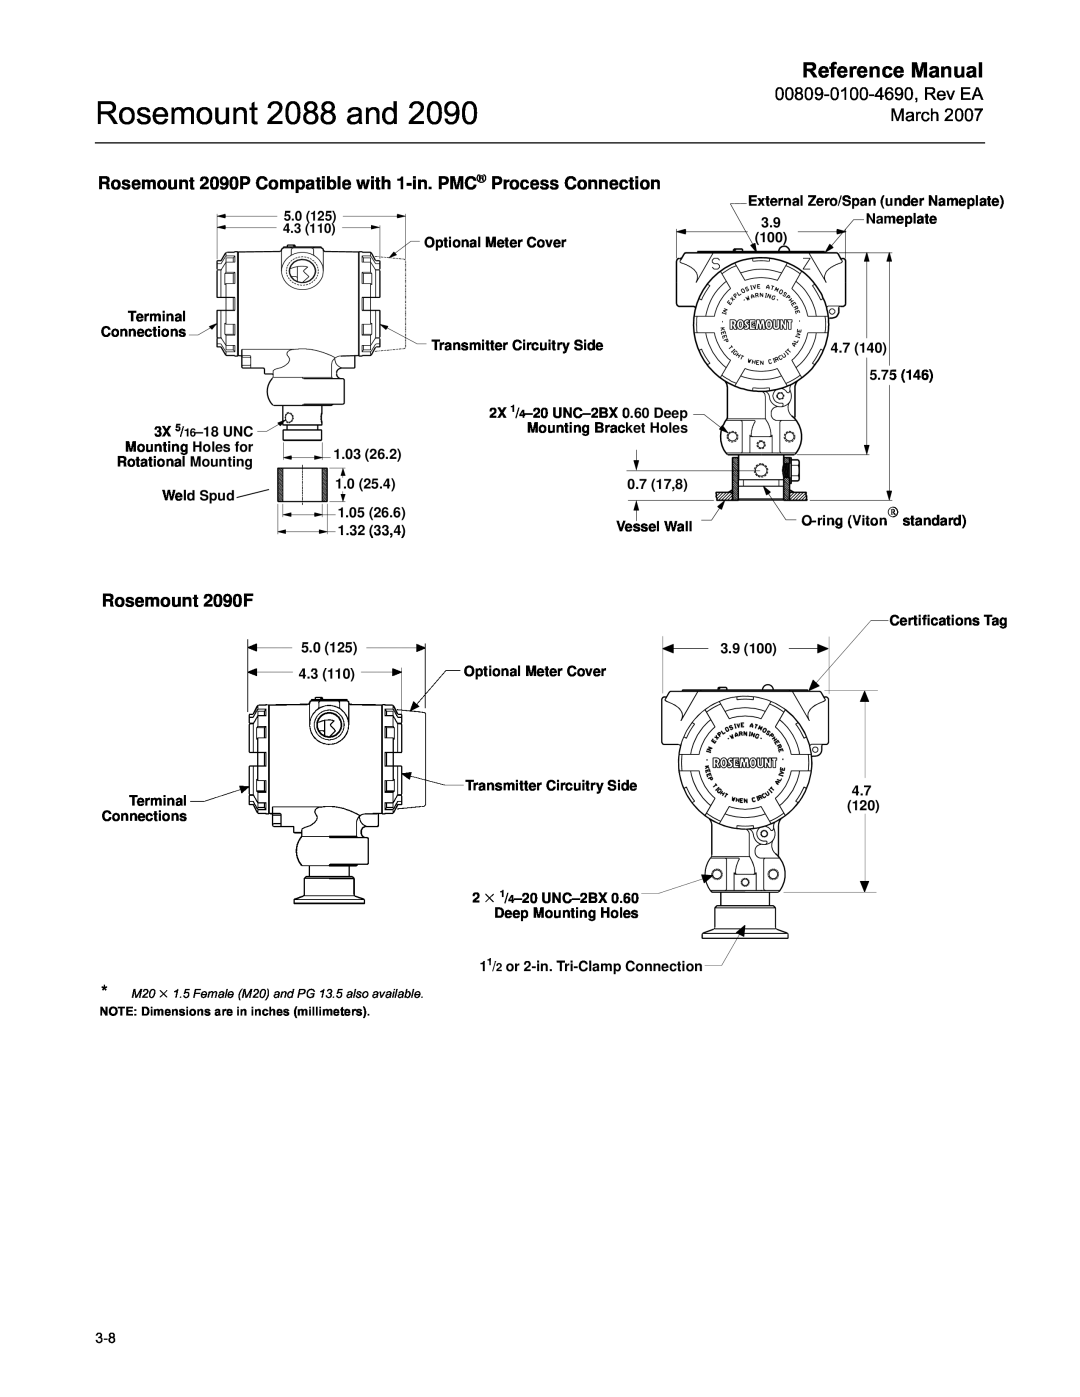 Emerson Process Management manual Rosemount 2090F, Rosemount 2088 and, Reference Manual 